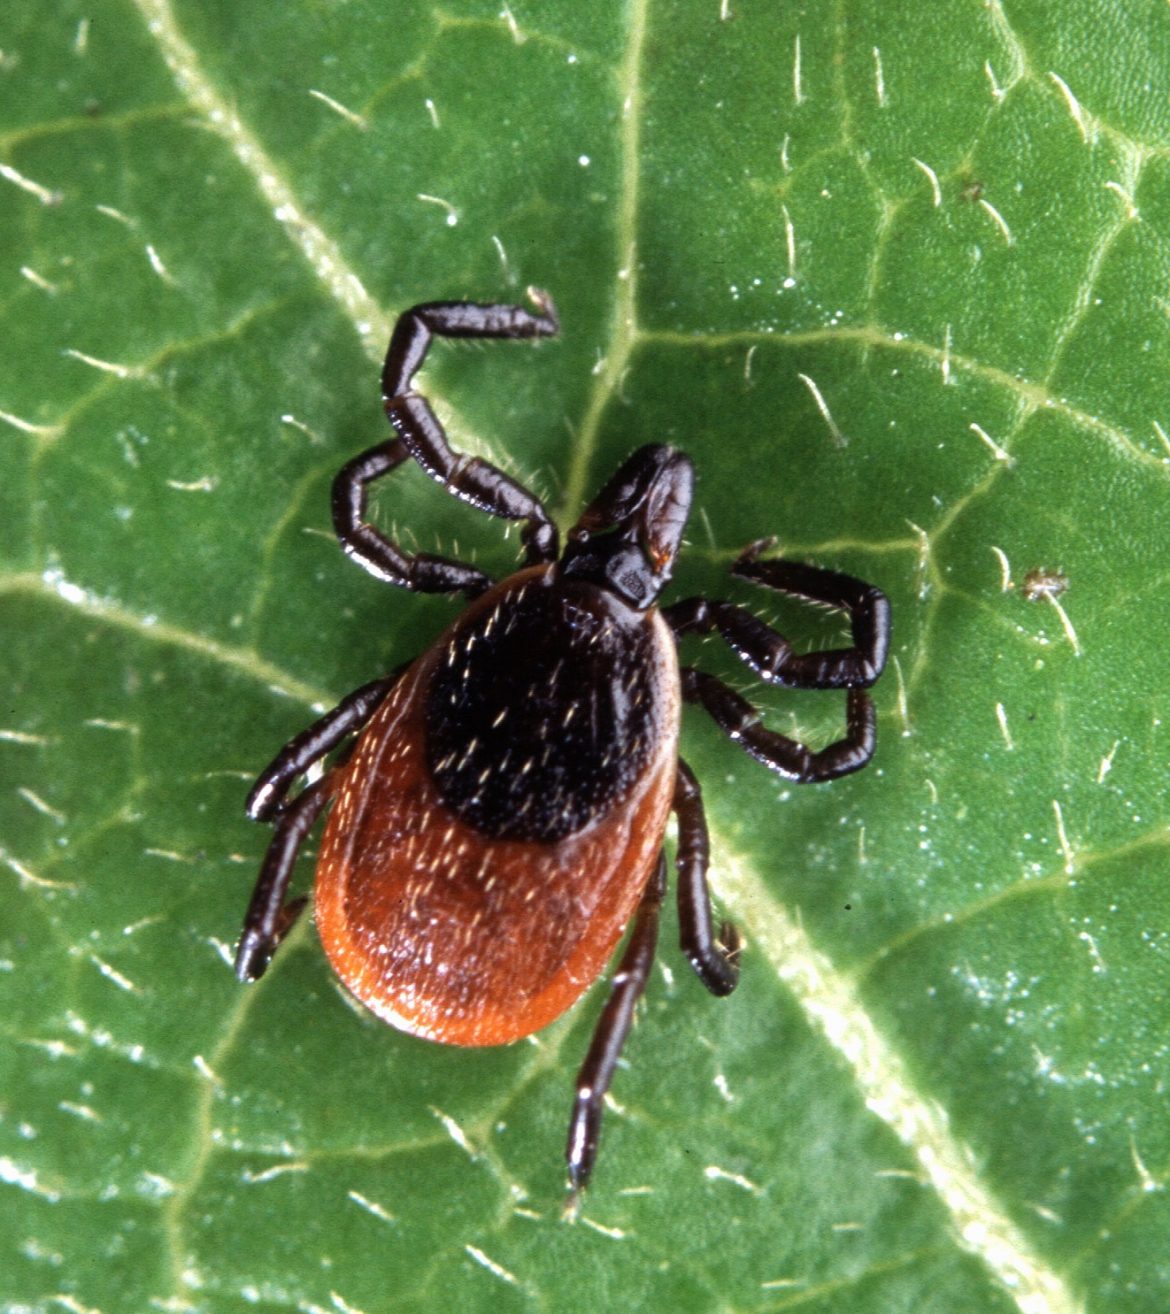 Deer ticks carry Lyme disease. Image: Wikimedia Commons